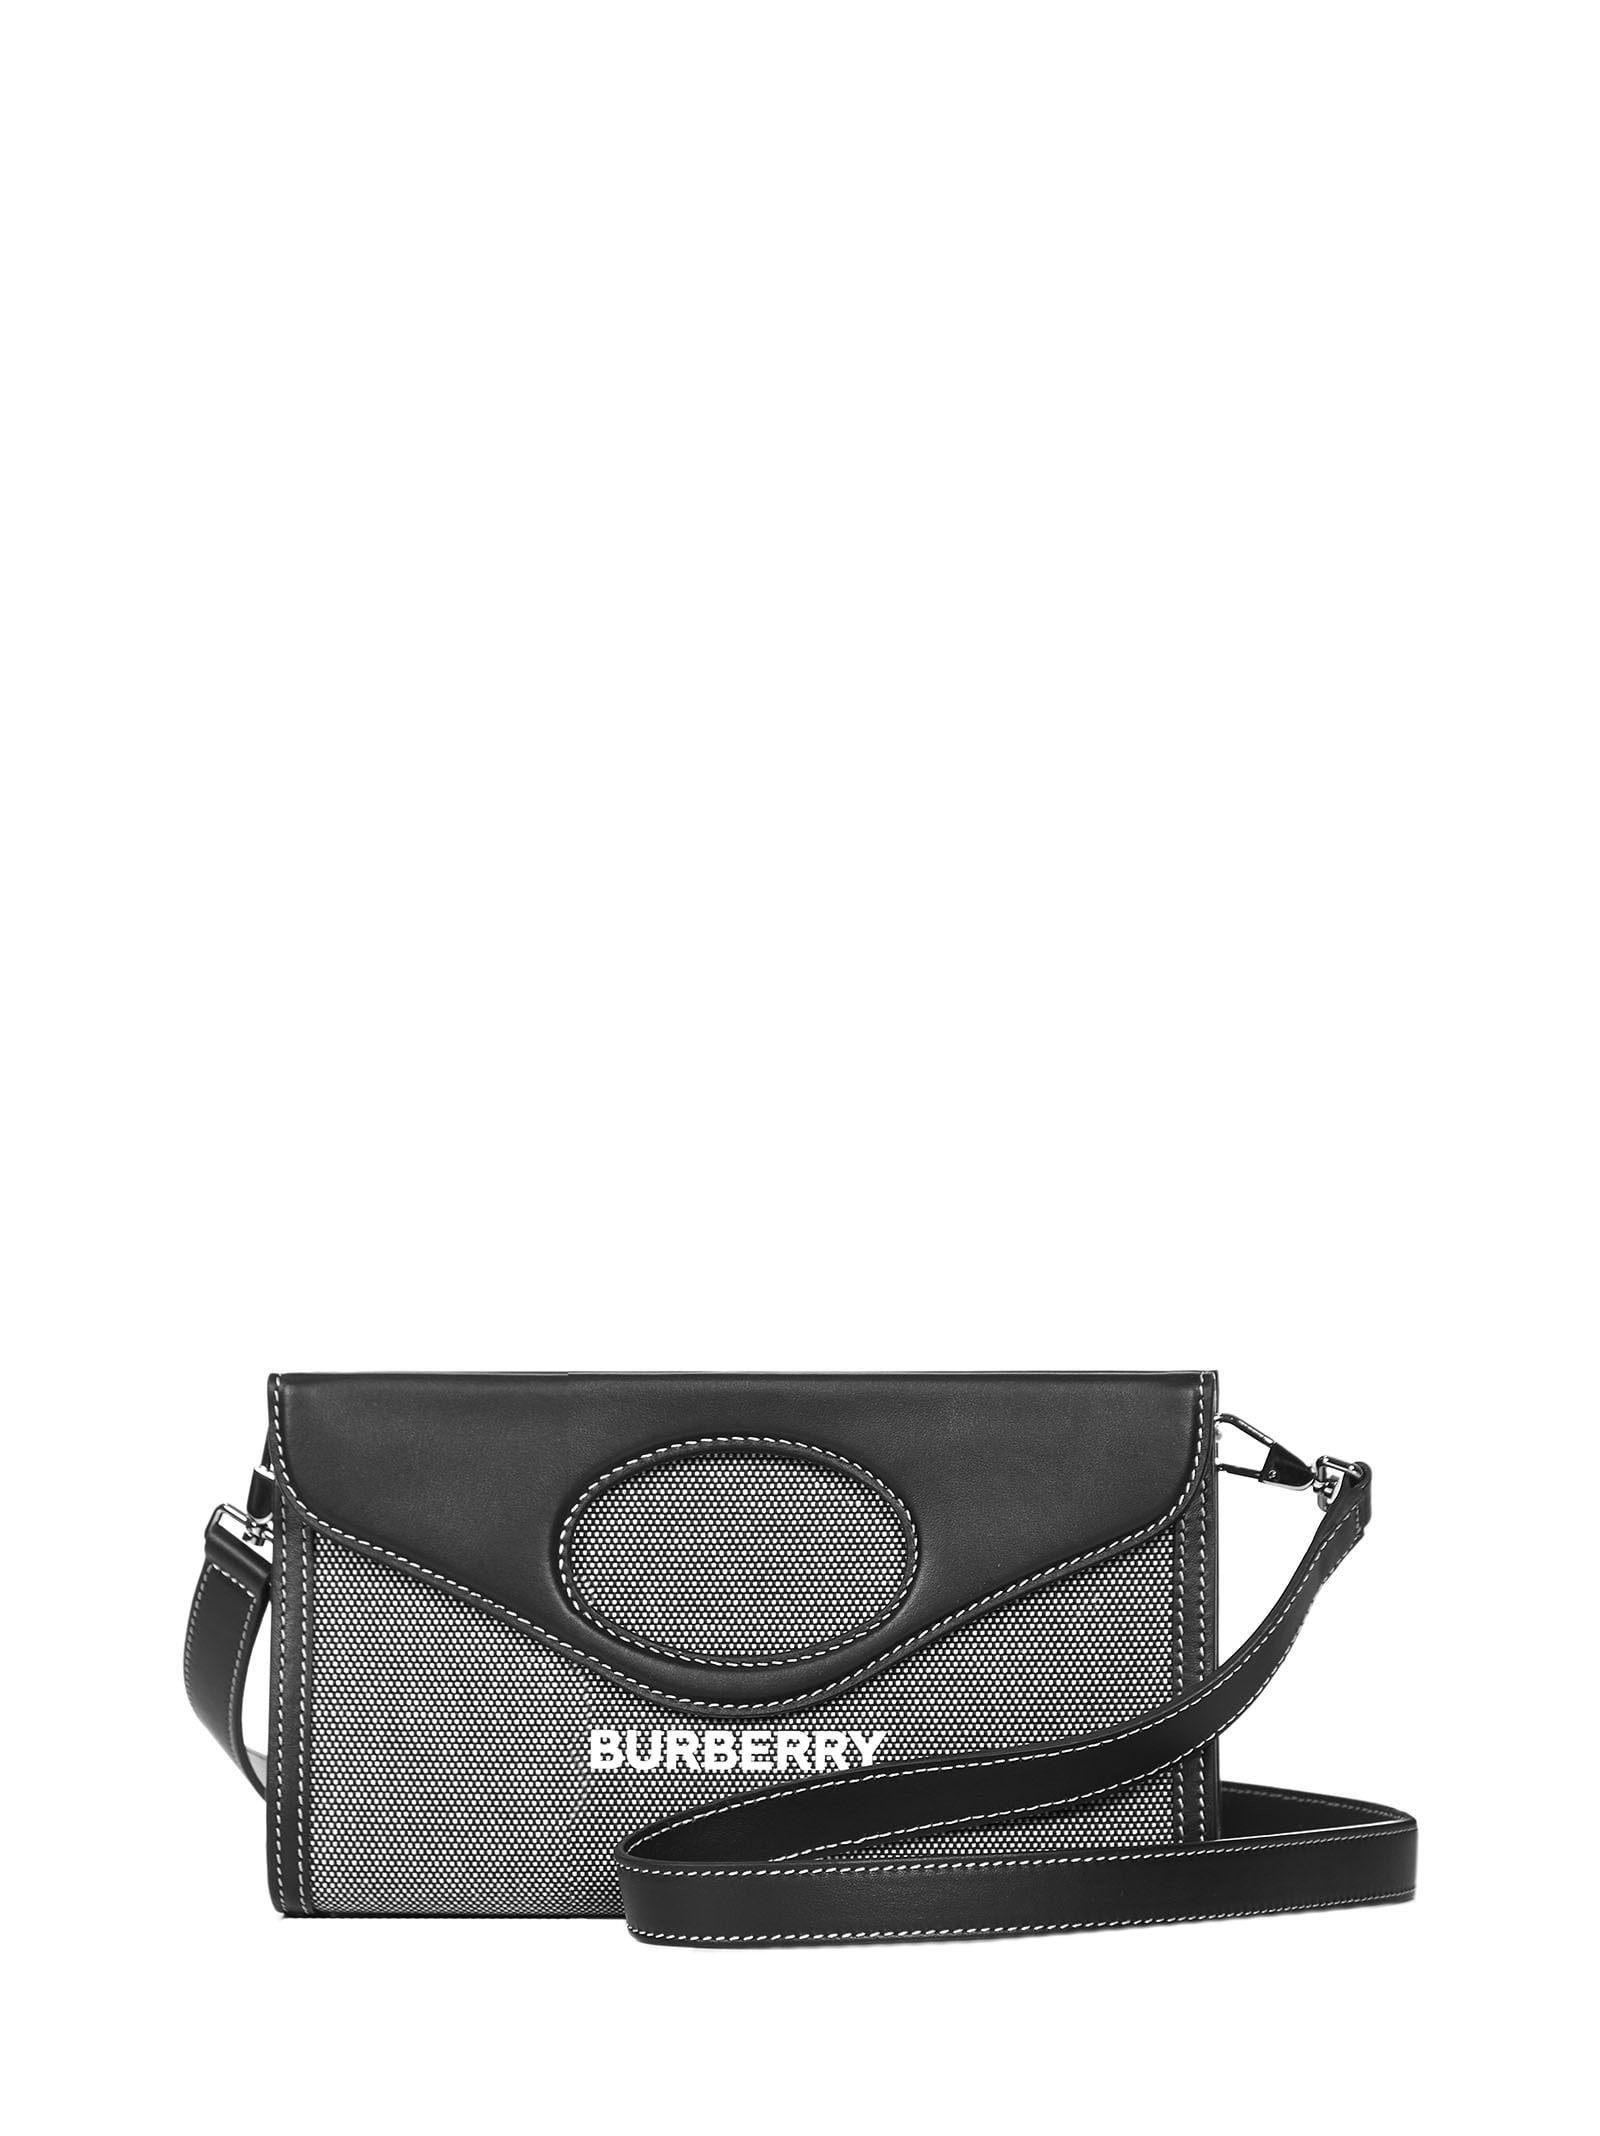 Burberry Pocket Tote